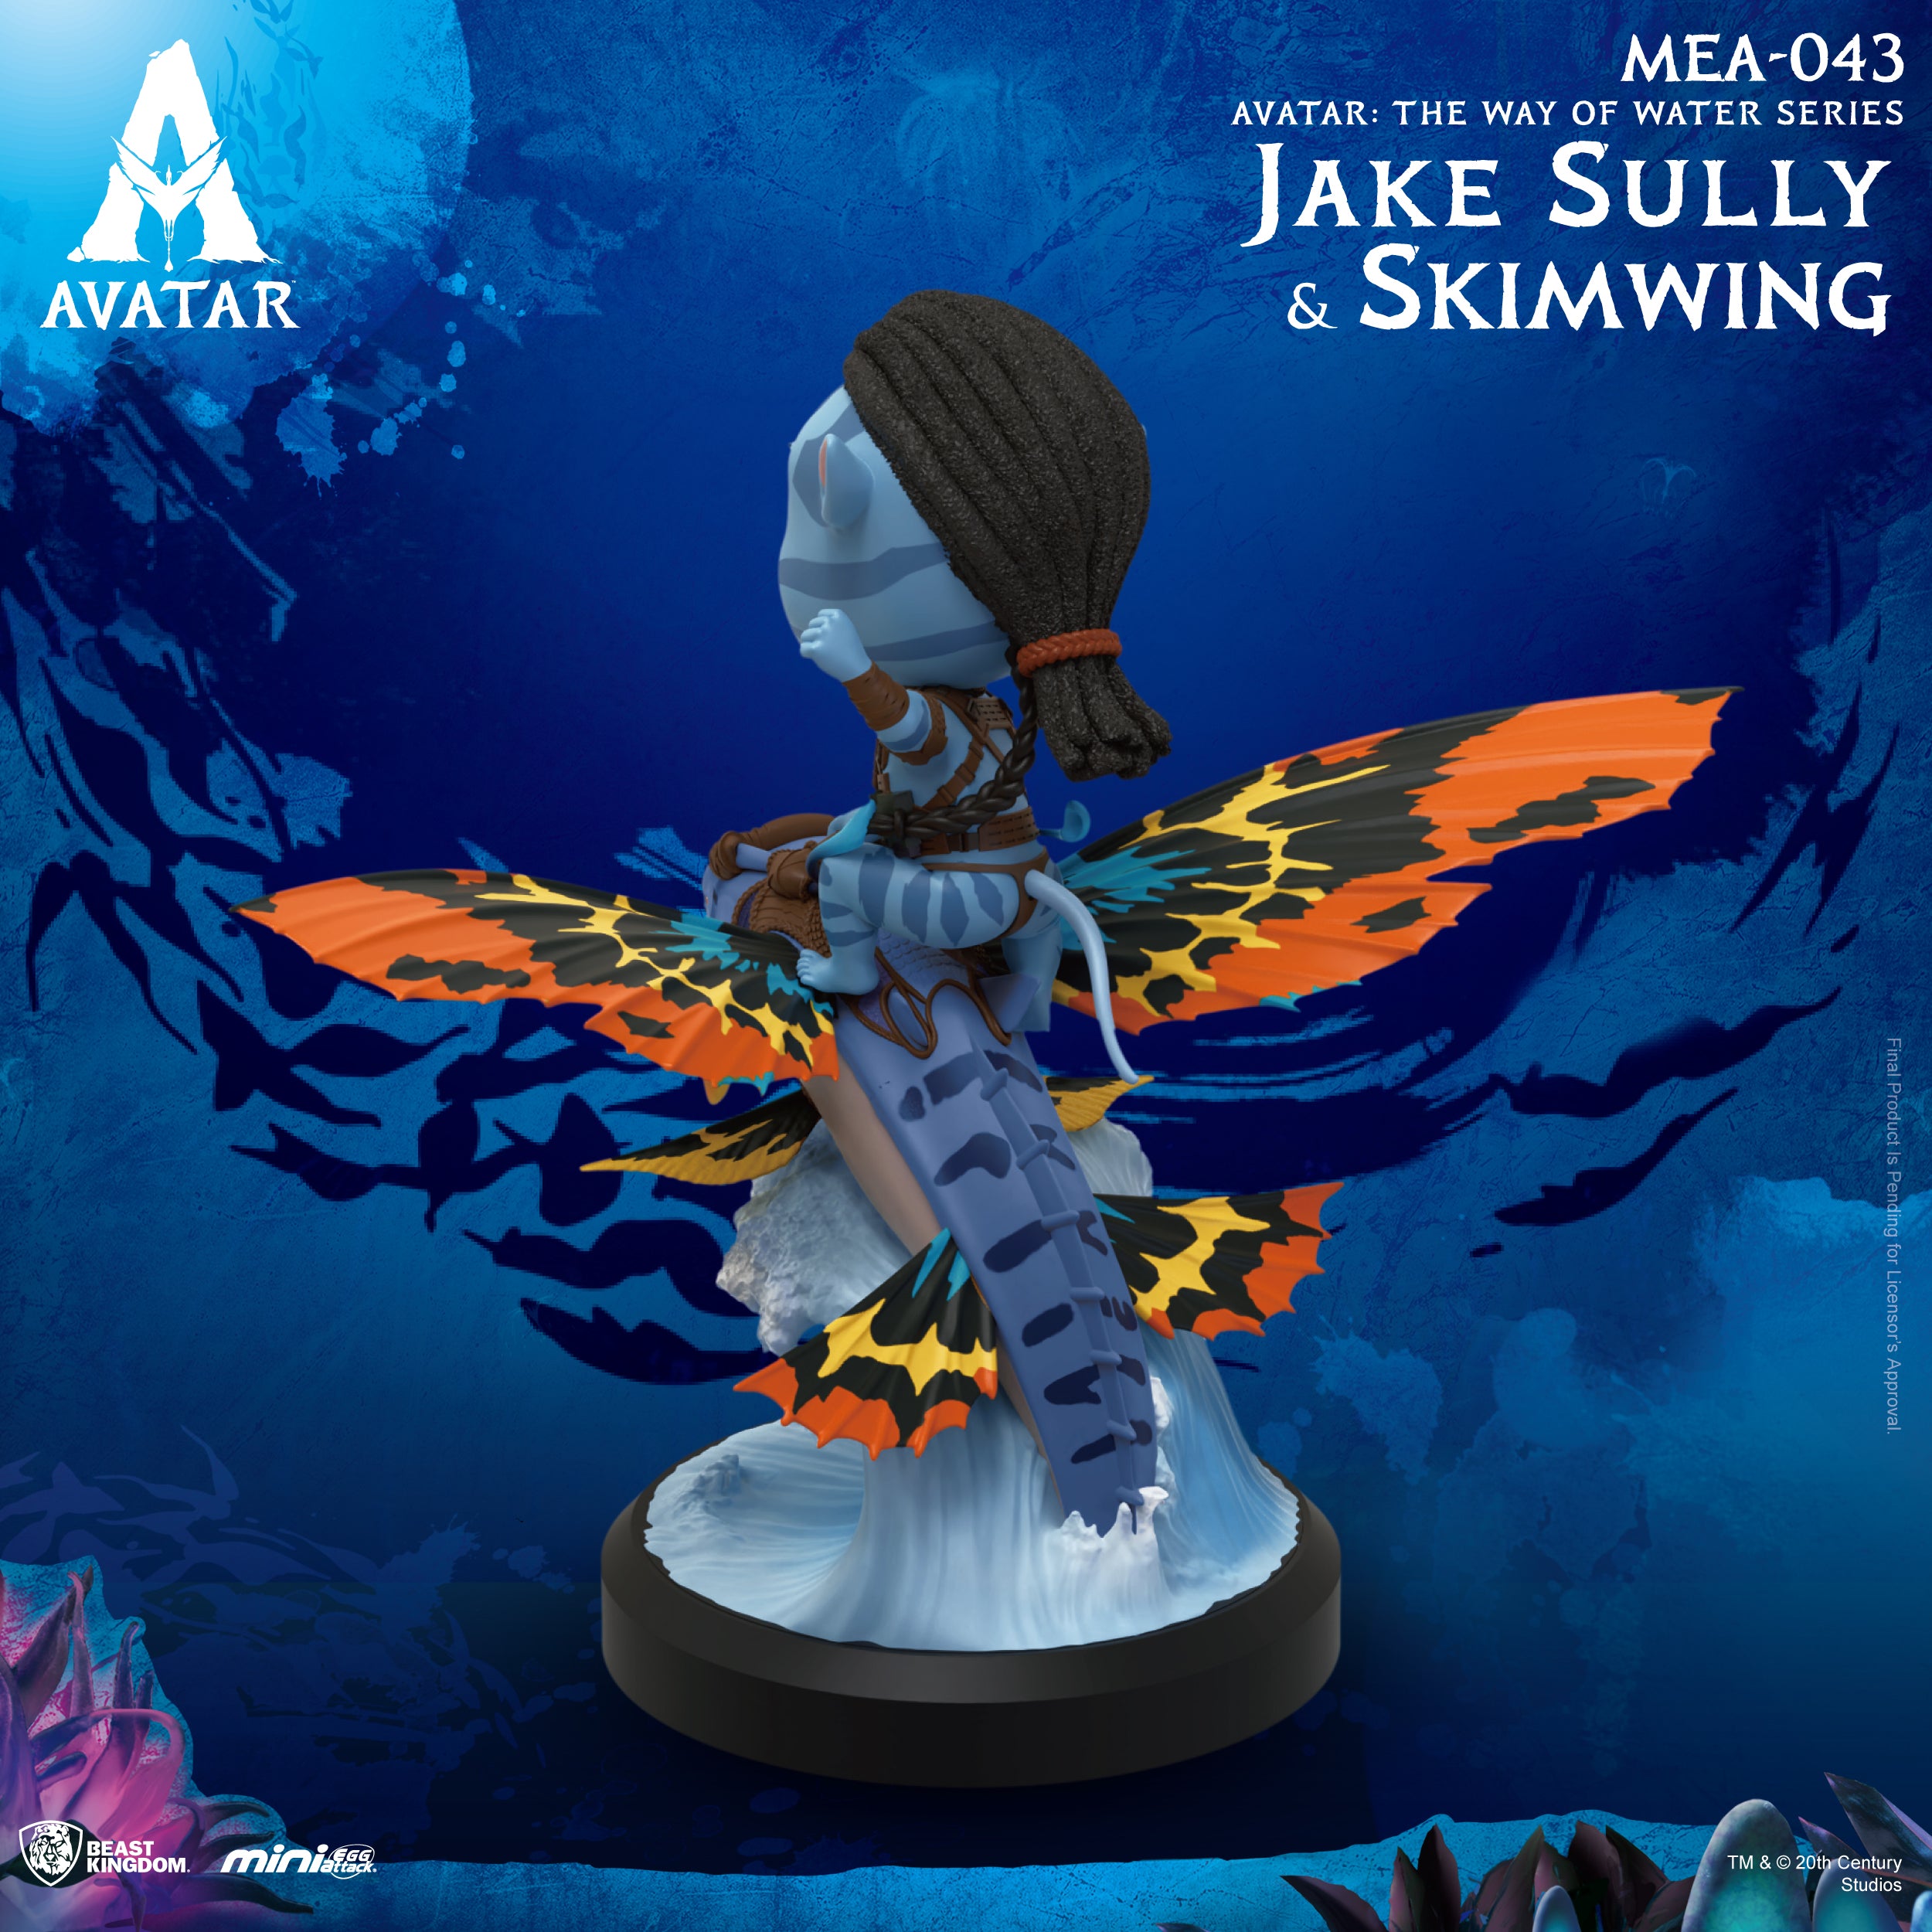 Beast Kingdom MEA-043 Disney Avatar: The Way Of Water Series Jake Sully & Skimwing Mini Egg Attack Figure